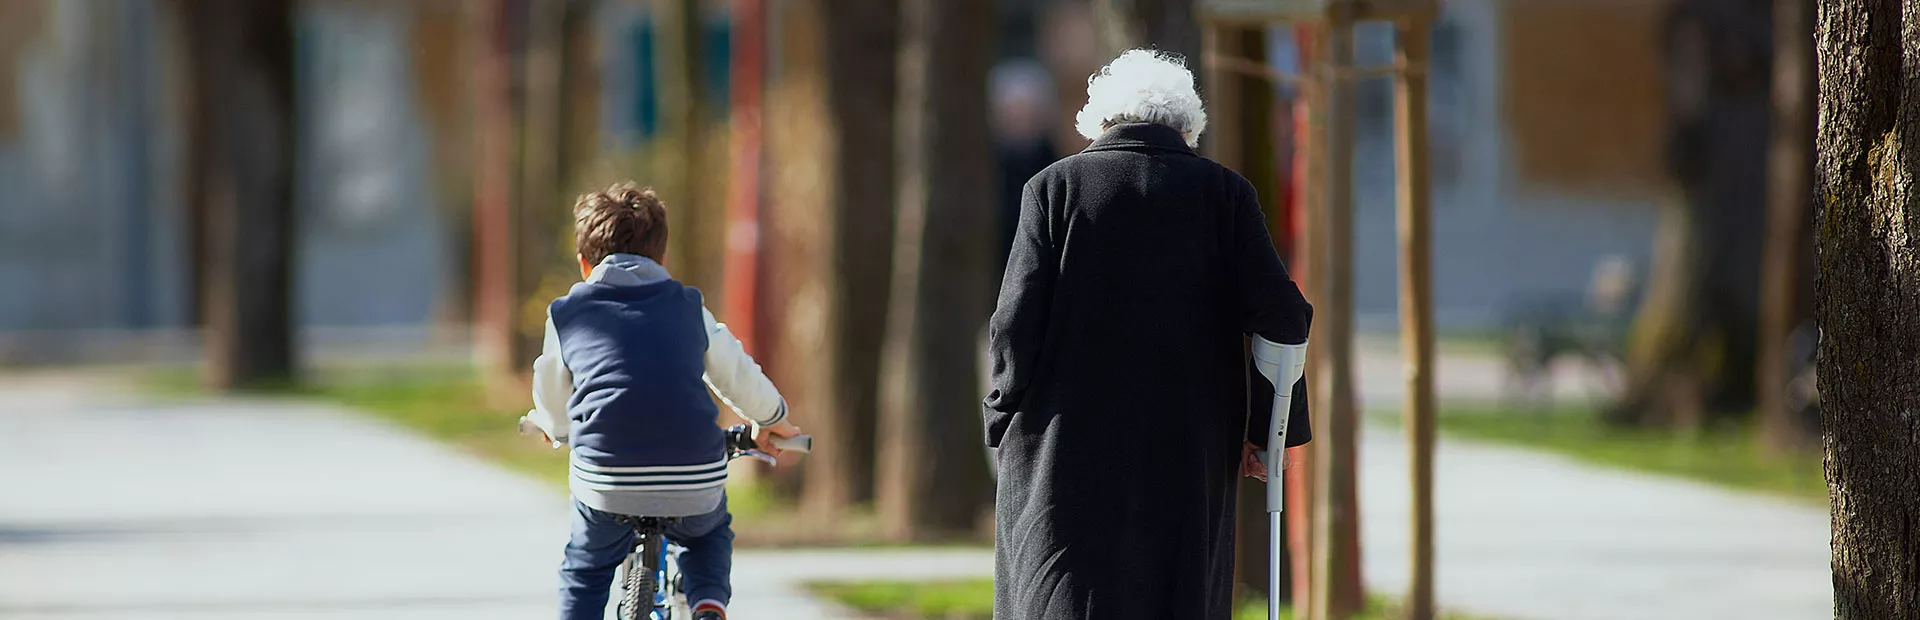 Young boy rides bike next to an elderly woman